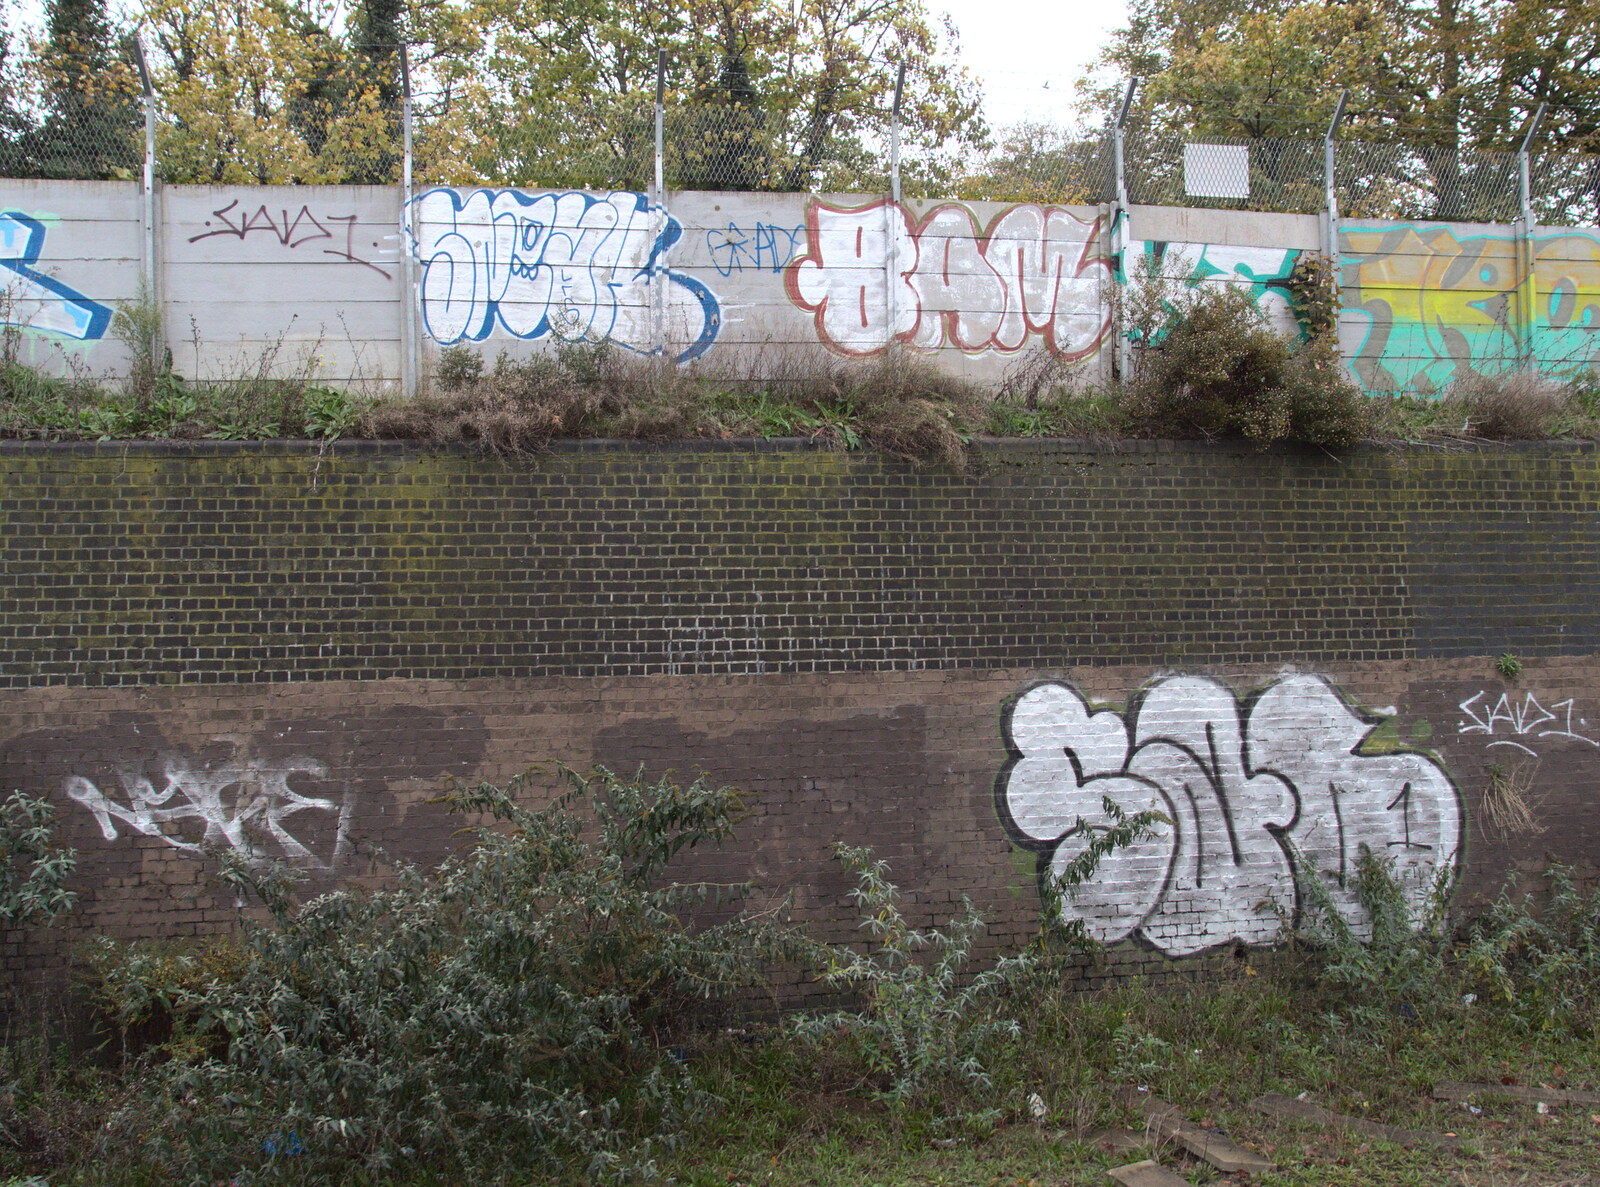 Railway graffiti from A Melting House Made of Wax, Southwark, London - 12th November 2014